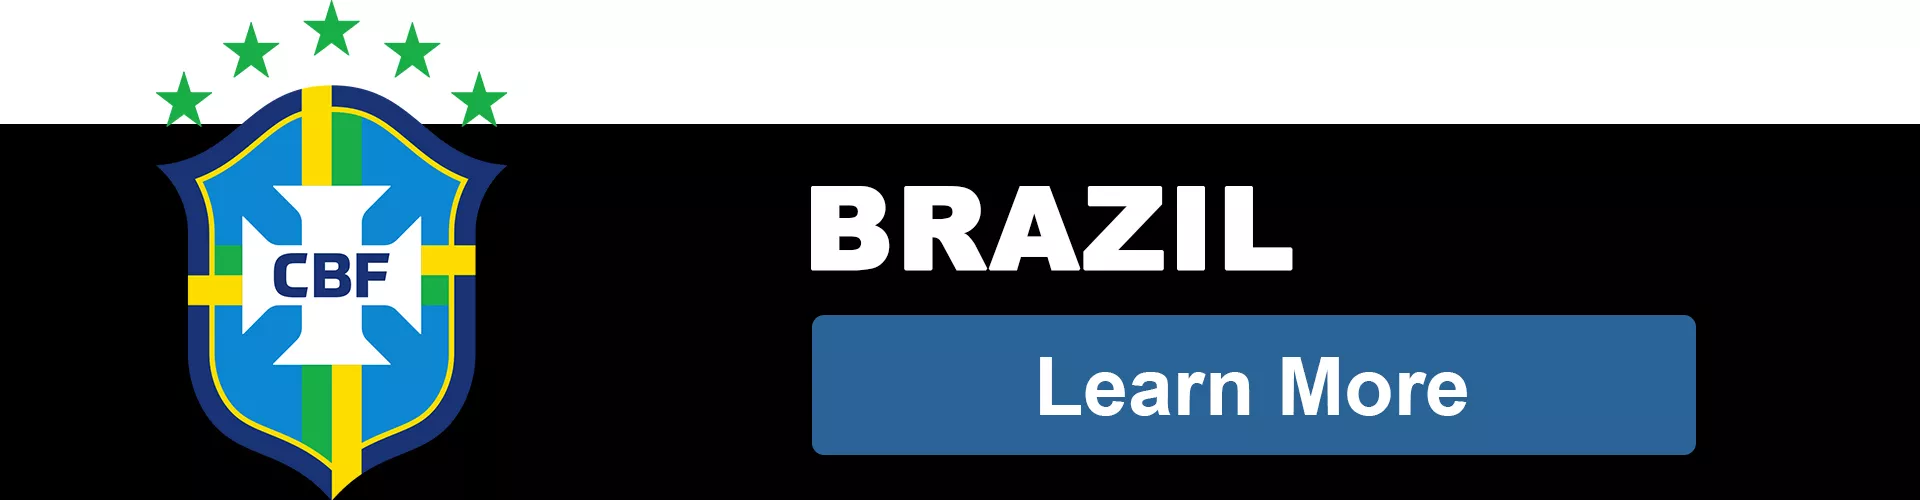 BRAZIL TEAM - bestsoccerstore